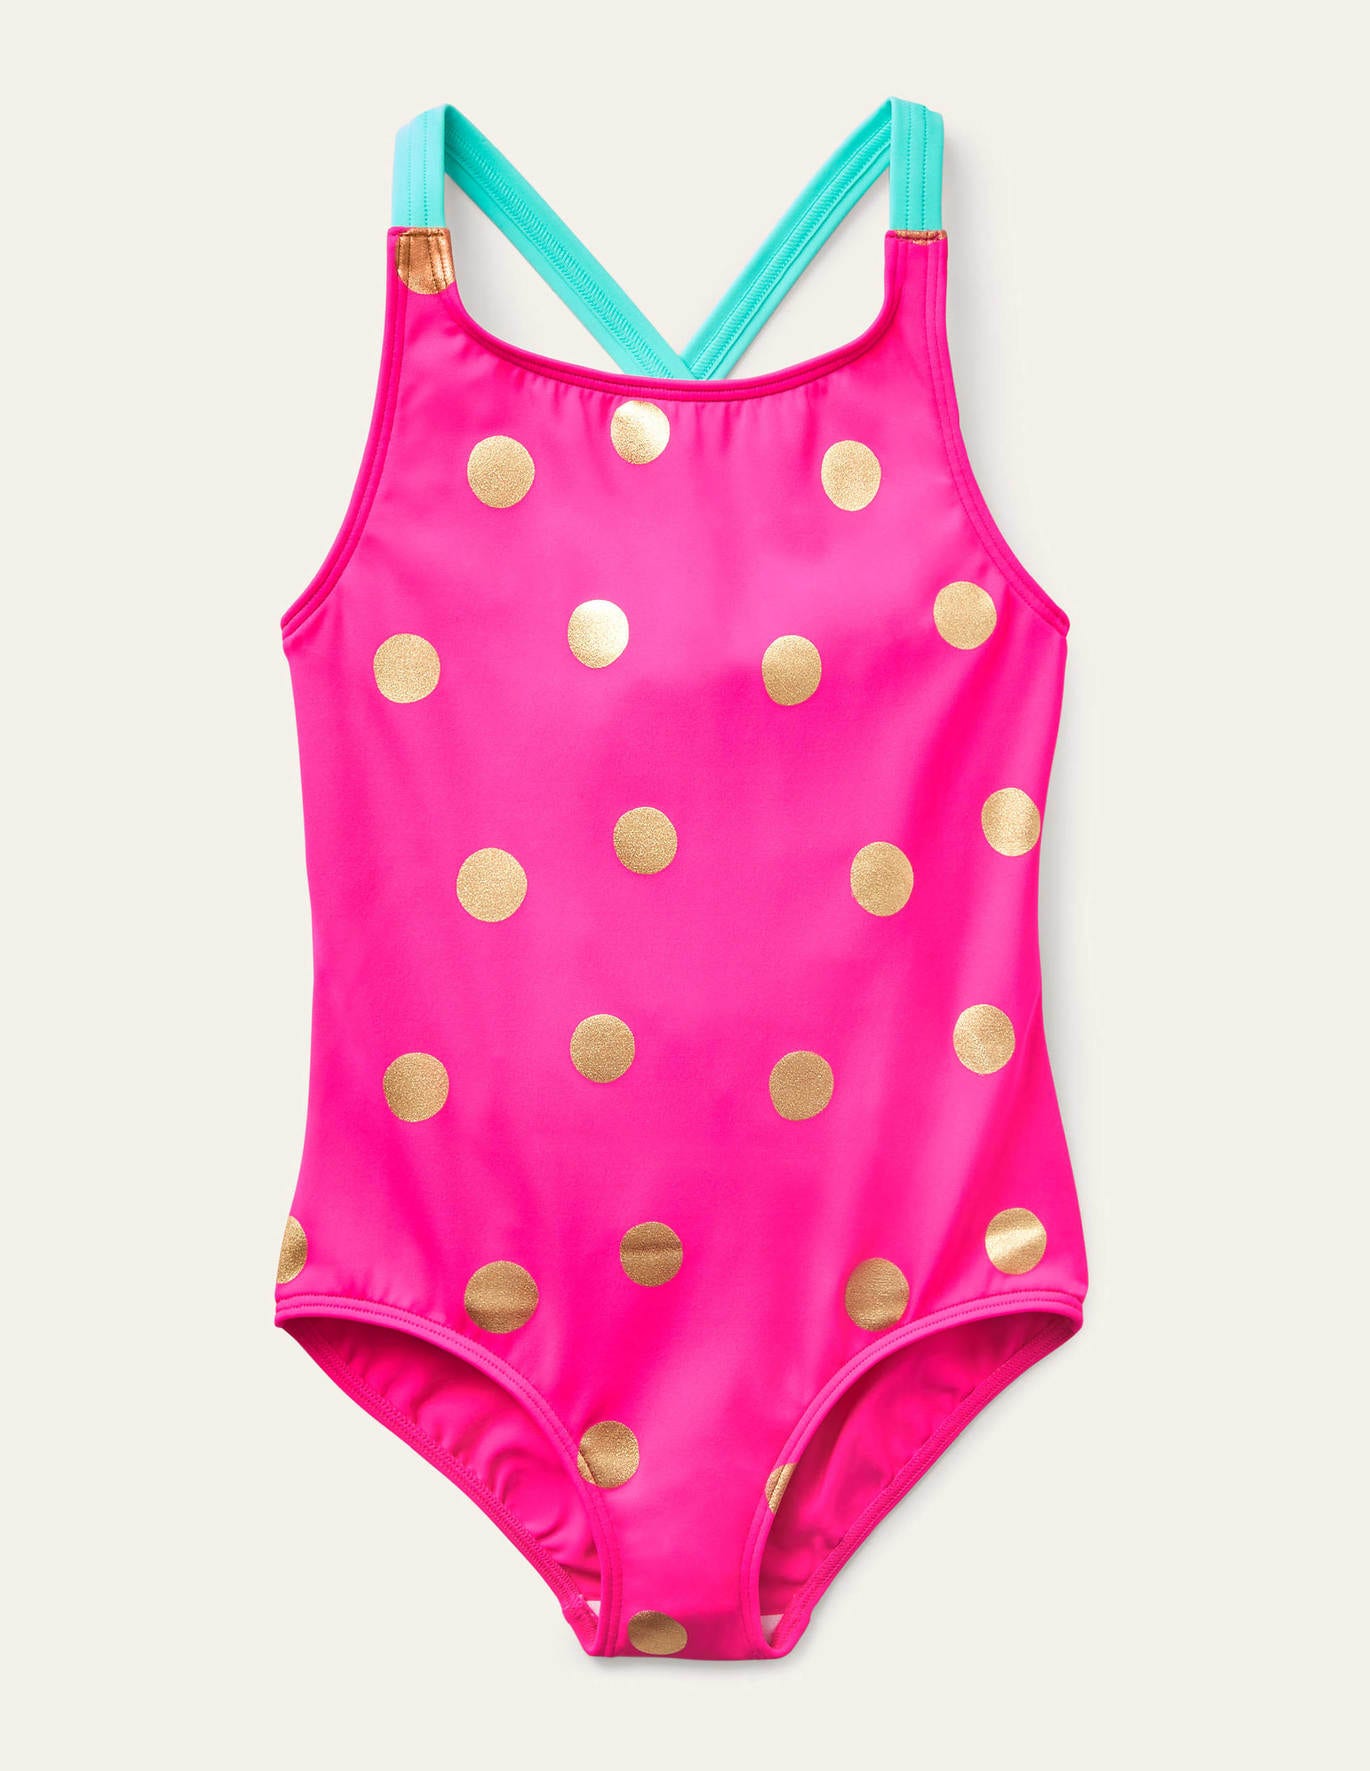 Boden Cross-back Printed Swimsuit - Fuchsia Pink Foil Spot